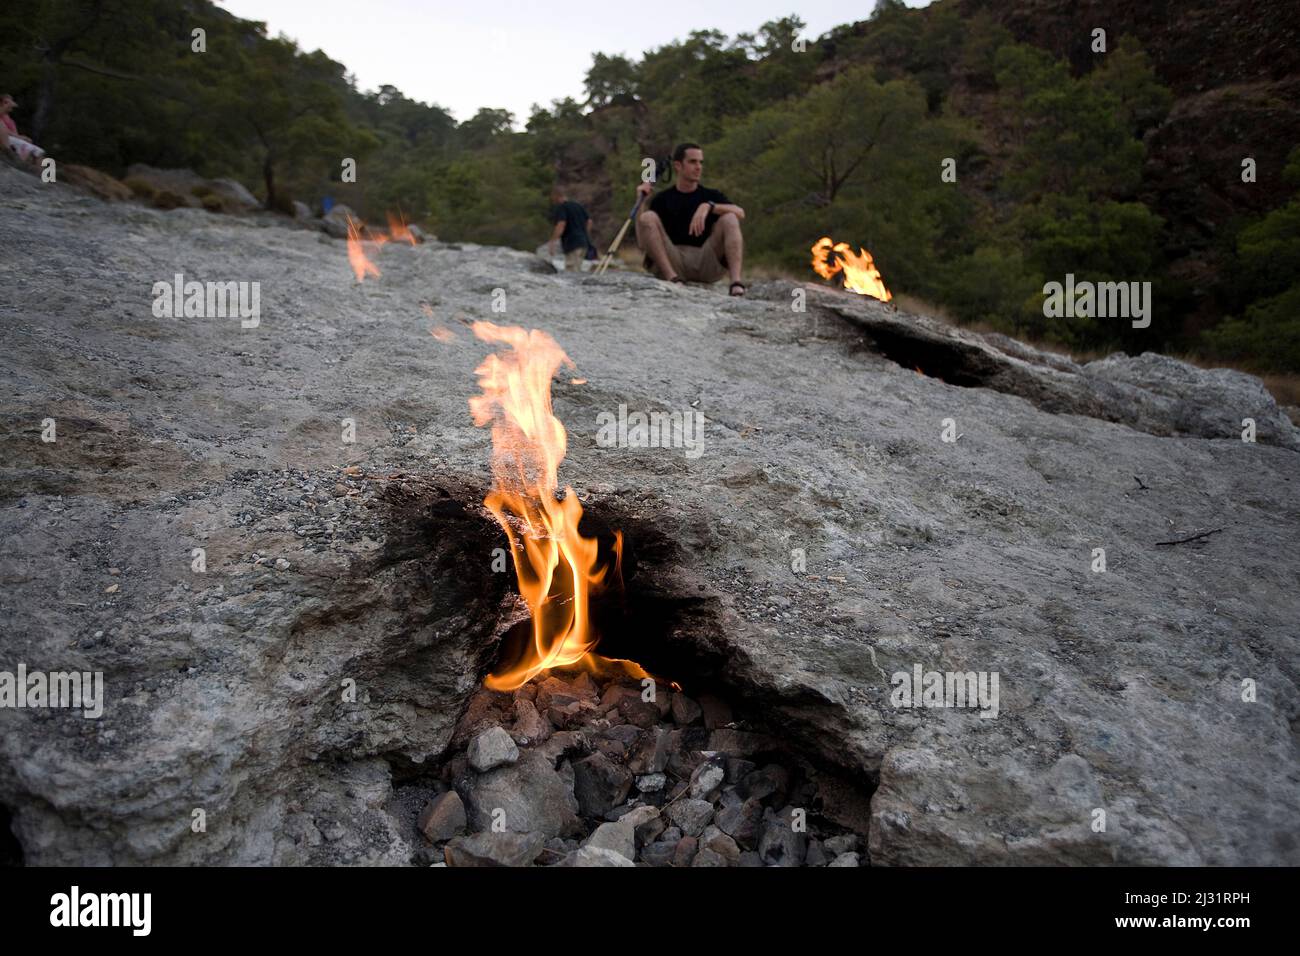 Chimaera flames, Mount Olympos, methane emissions which burning since the 4th century, Olympos national park, Cirali, Lykia, Turkey, Mediteranean sea Stock Photo